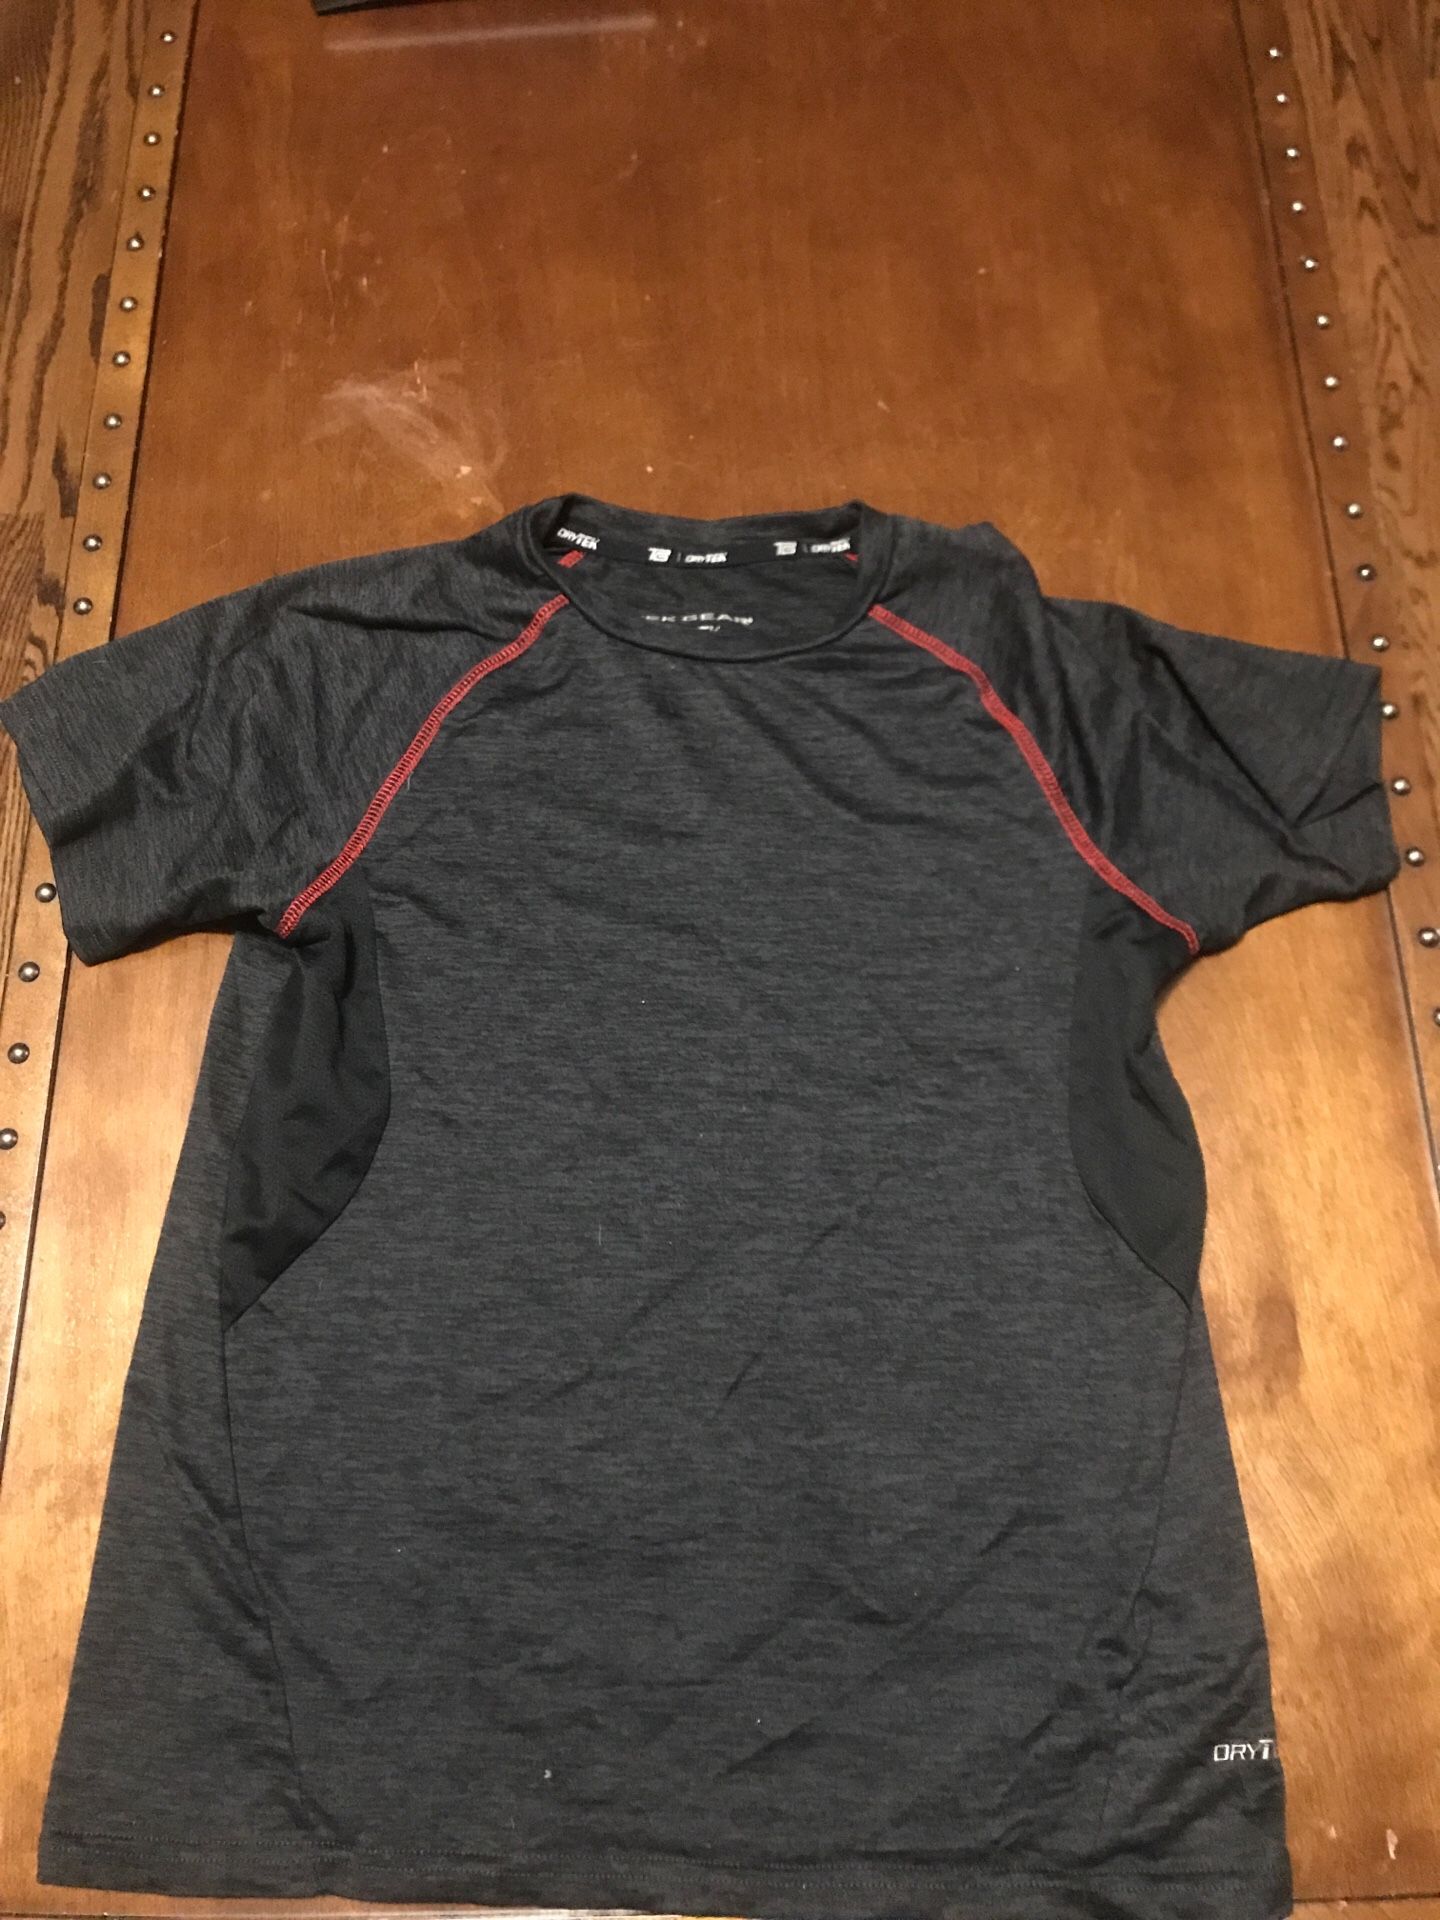 Boy’s size L Tek Gear dry fit T-shirt